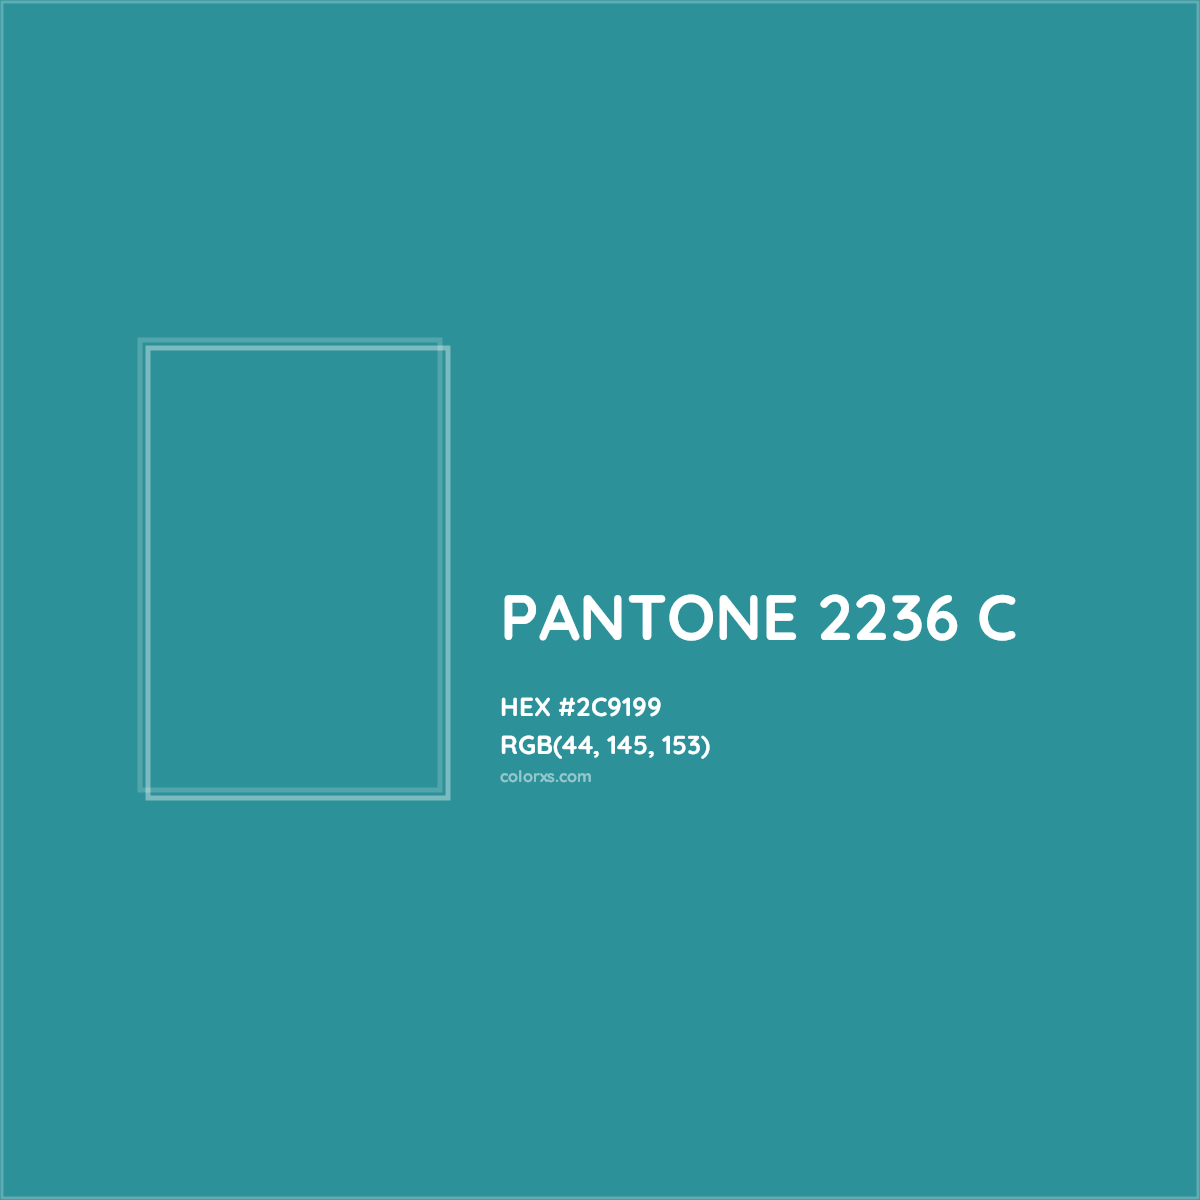 HEX #2C9199 PANTONE 2236 C CMS Pantone PMS - Color Code